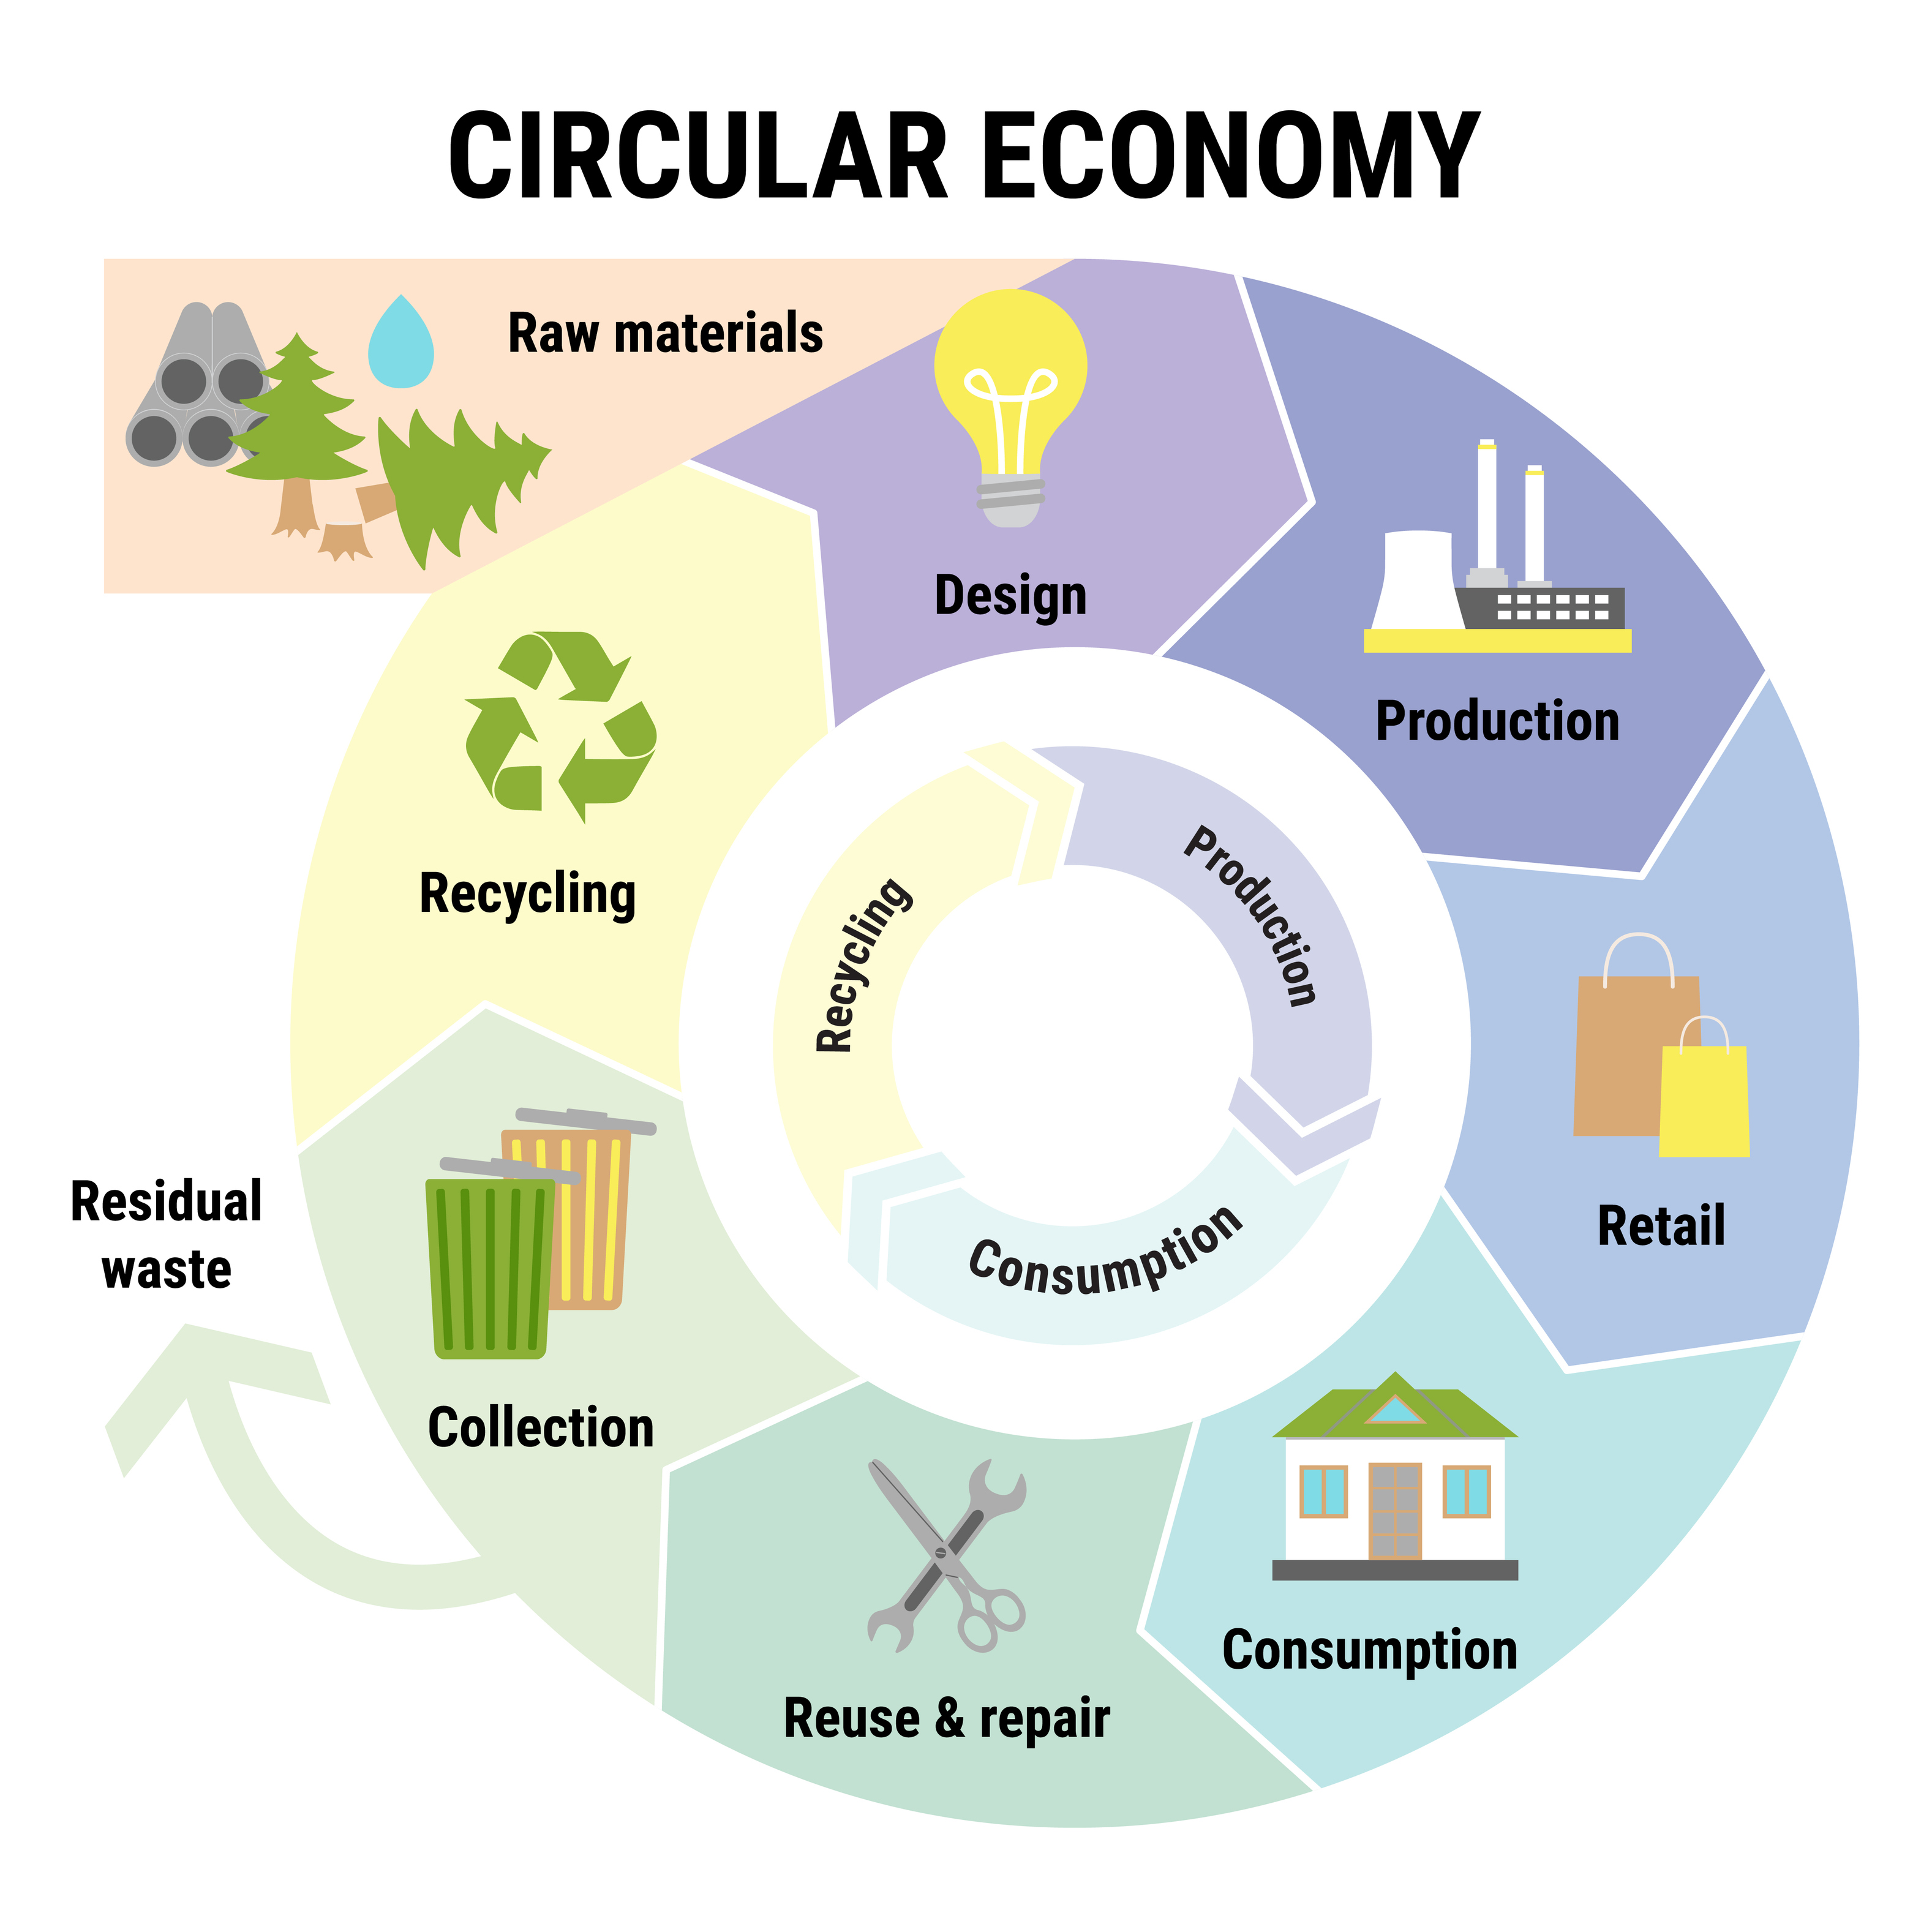 Circular economy principles